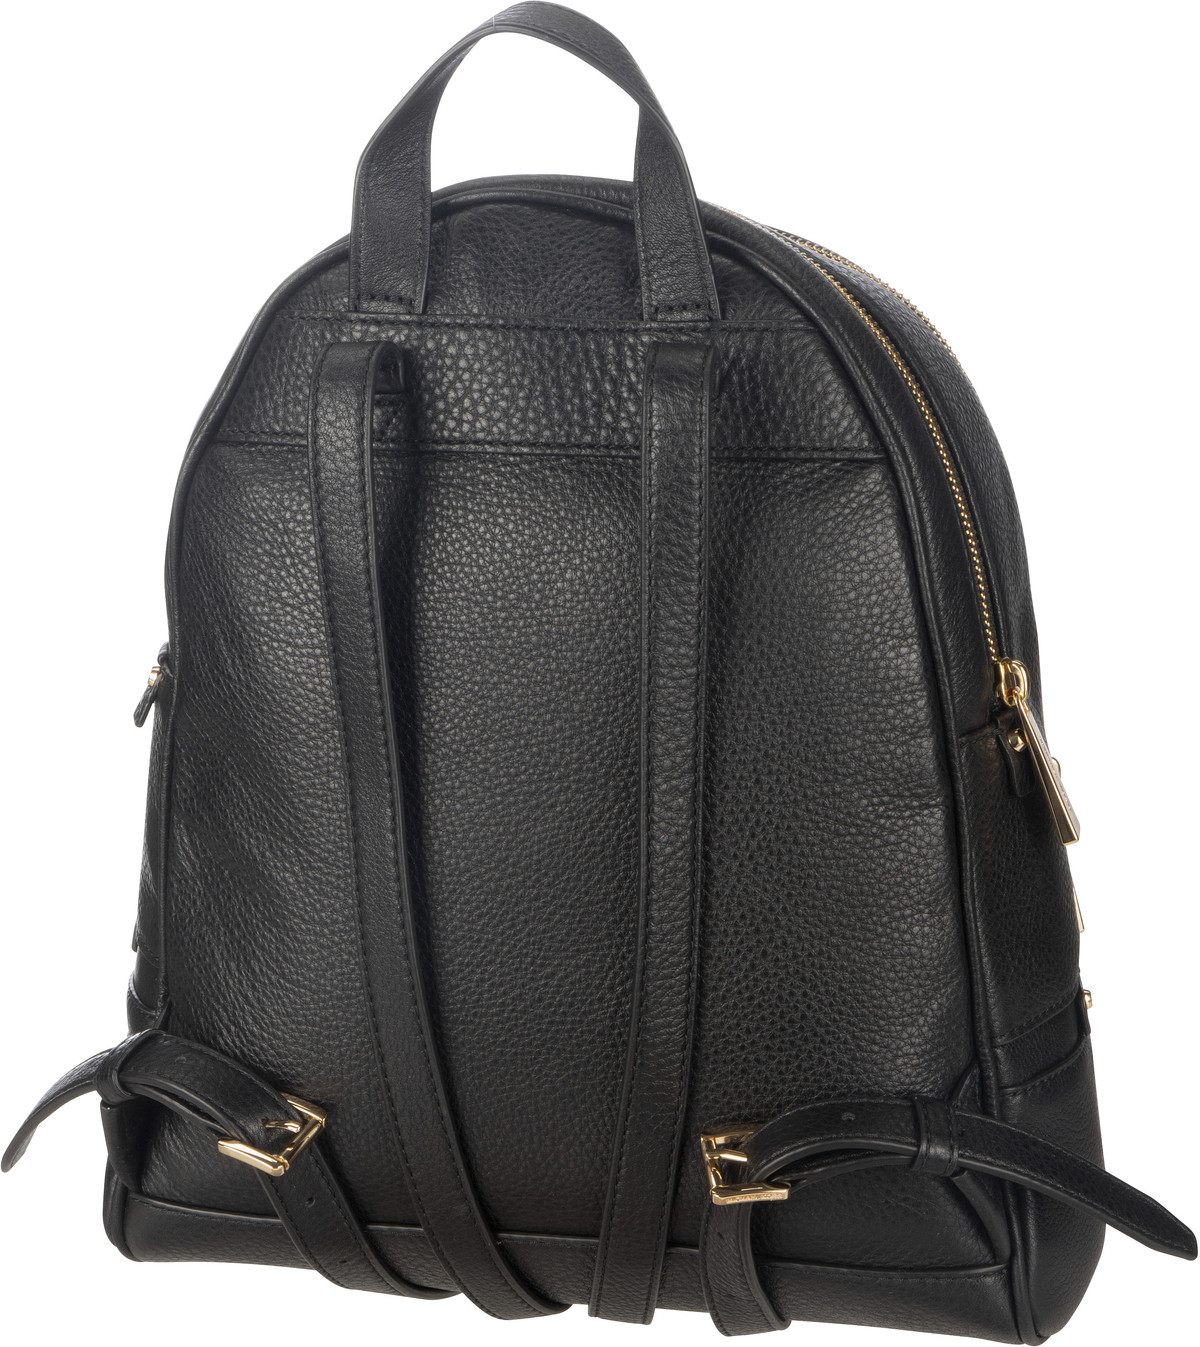 Michael Kors Rhea Zip Medium Backpack - Black